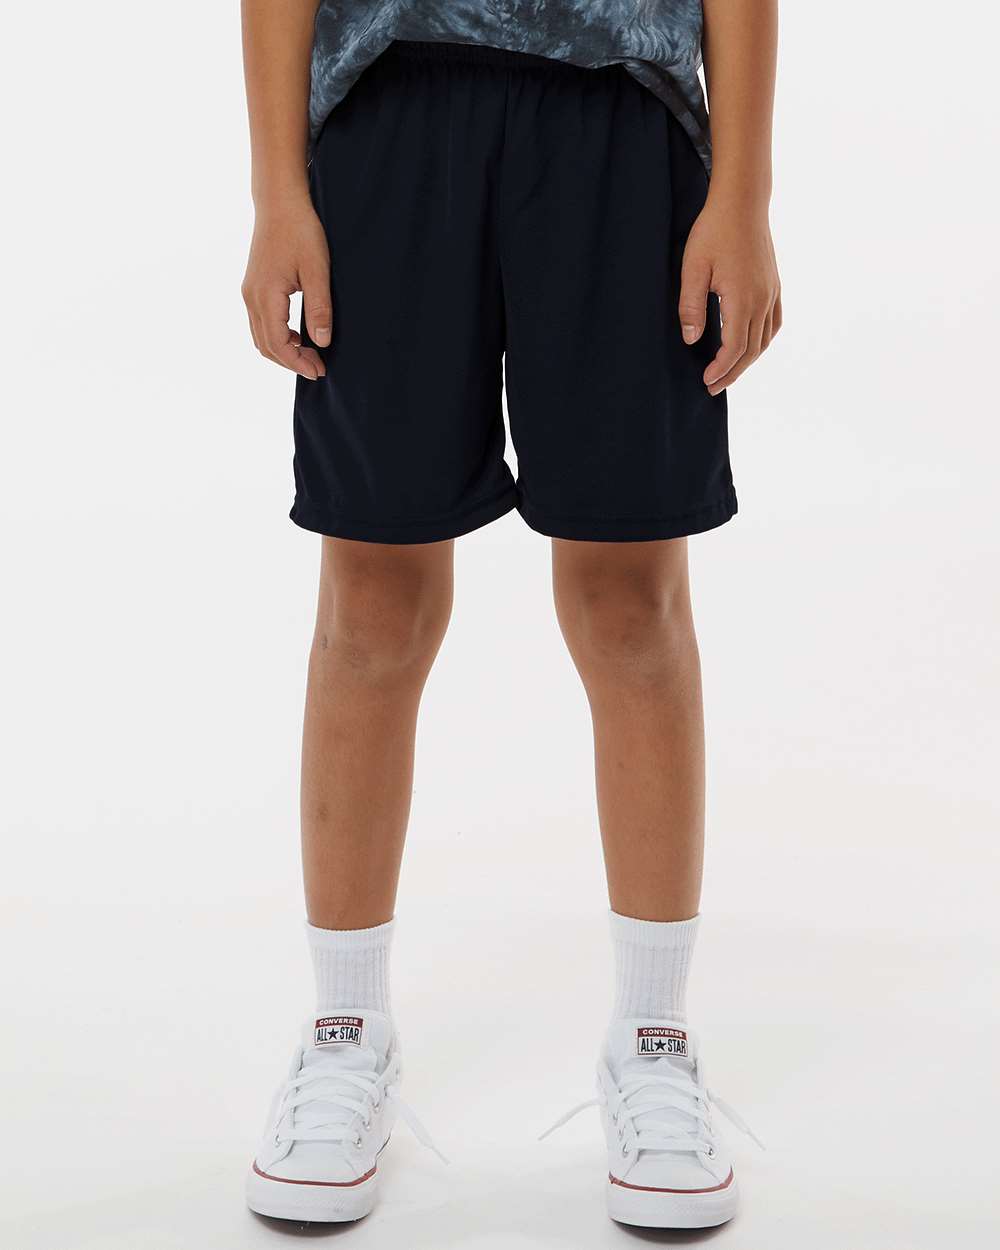 Augusta Sportswear 1426 - Youth Octane Shorts